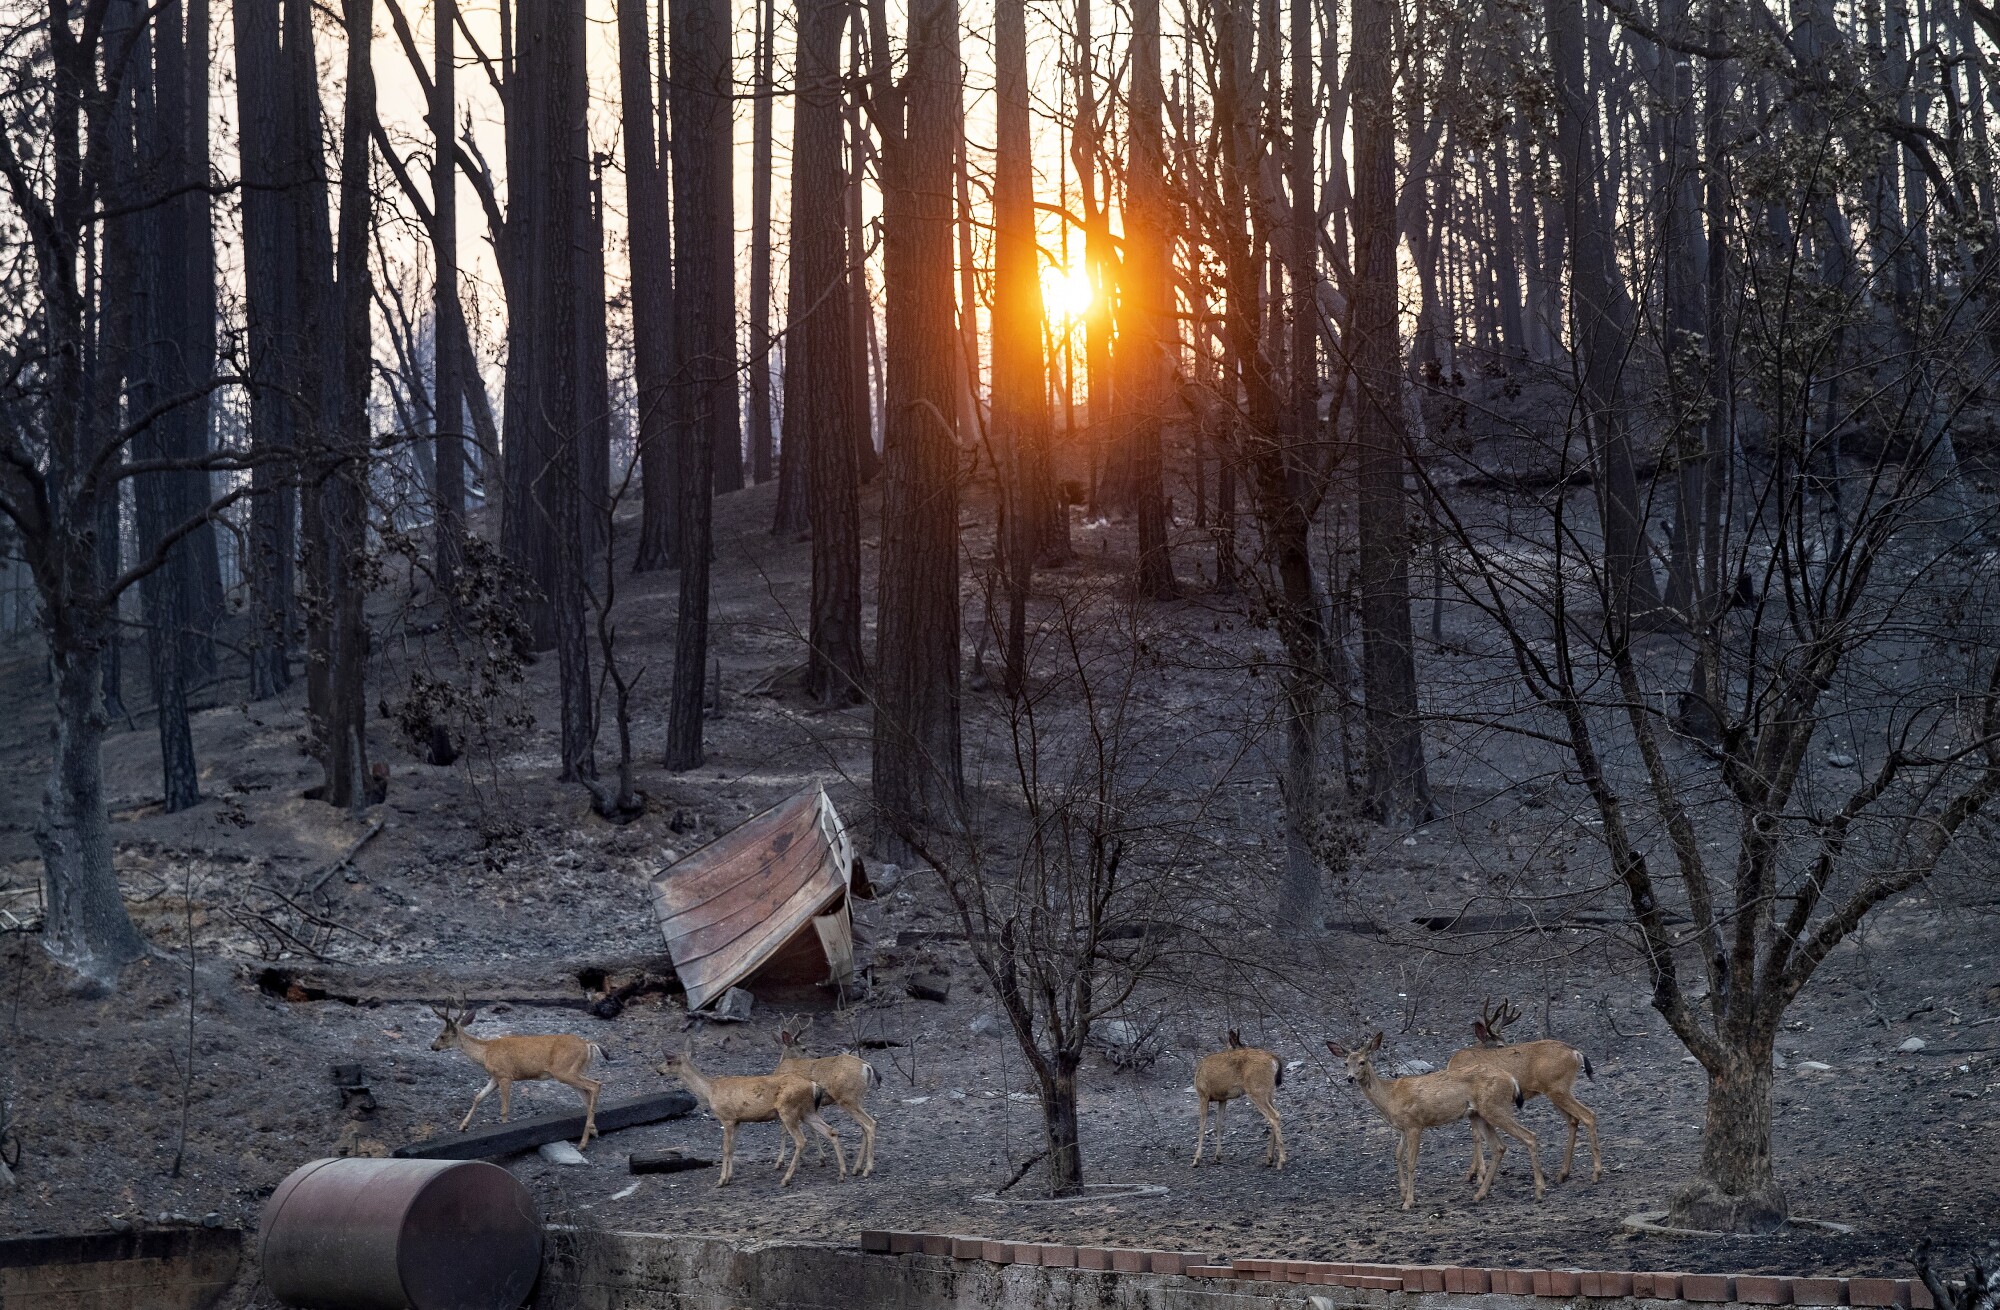 Deer walk among burnt trees.